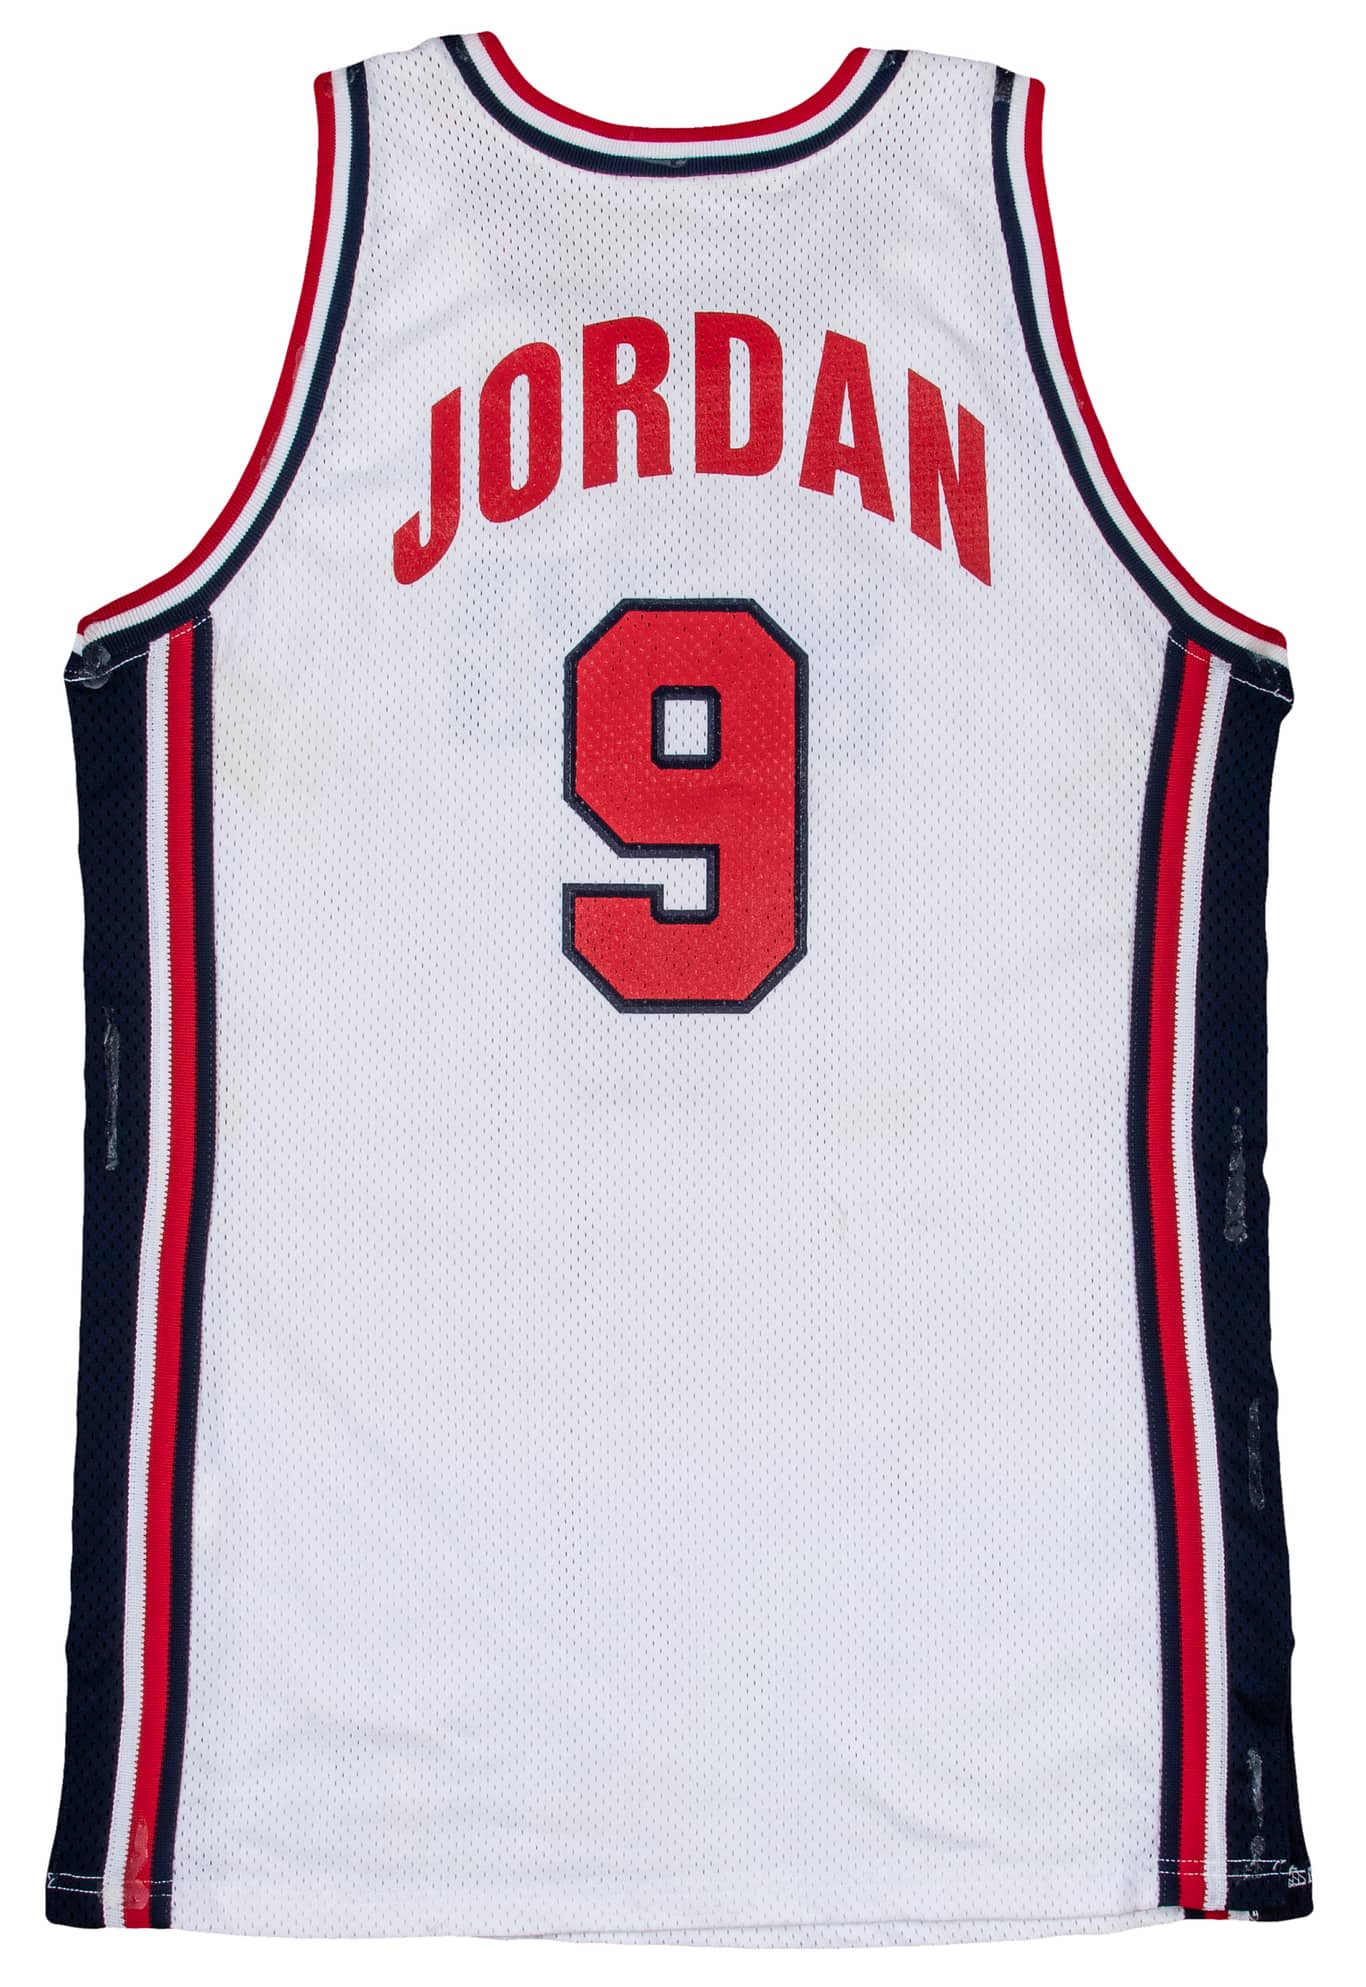 The back of Jordan's $3.3 million jersey sold by Goldin